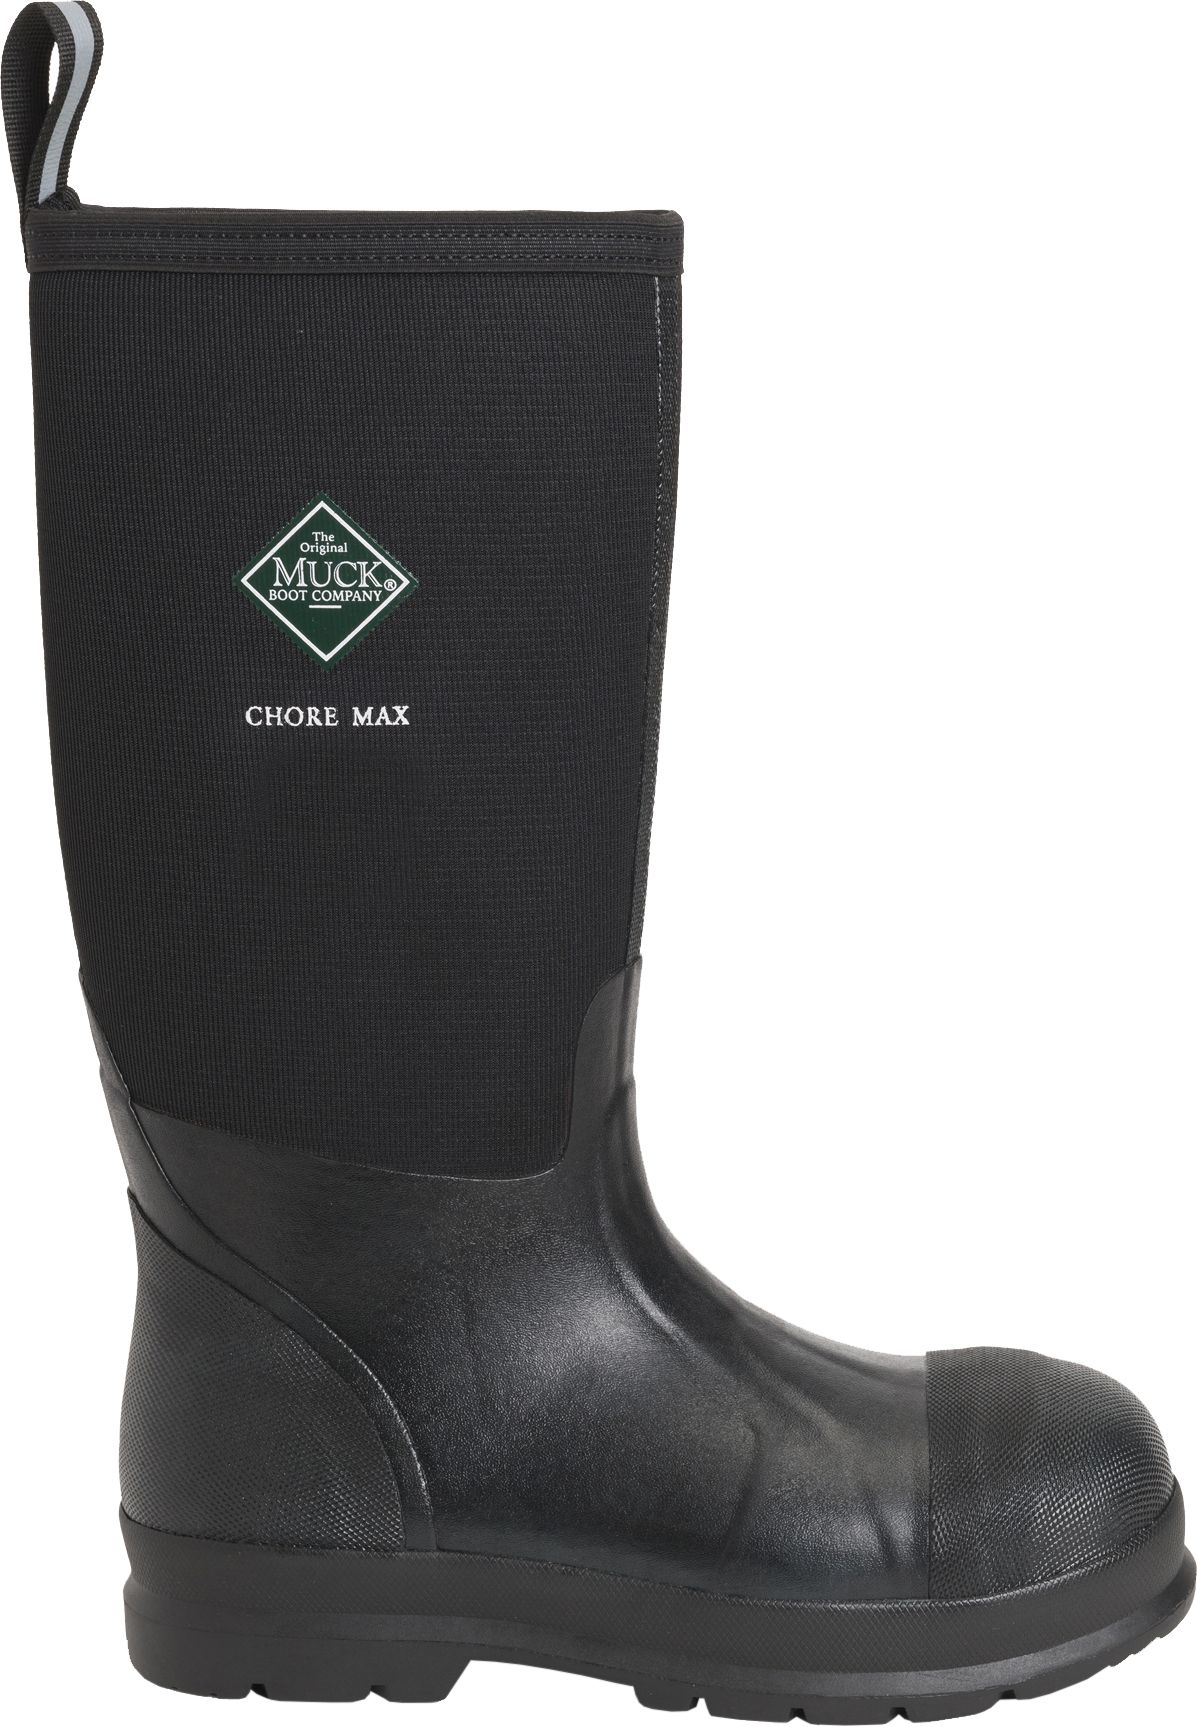 composite toe rubber boots